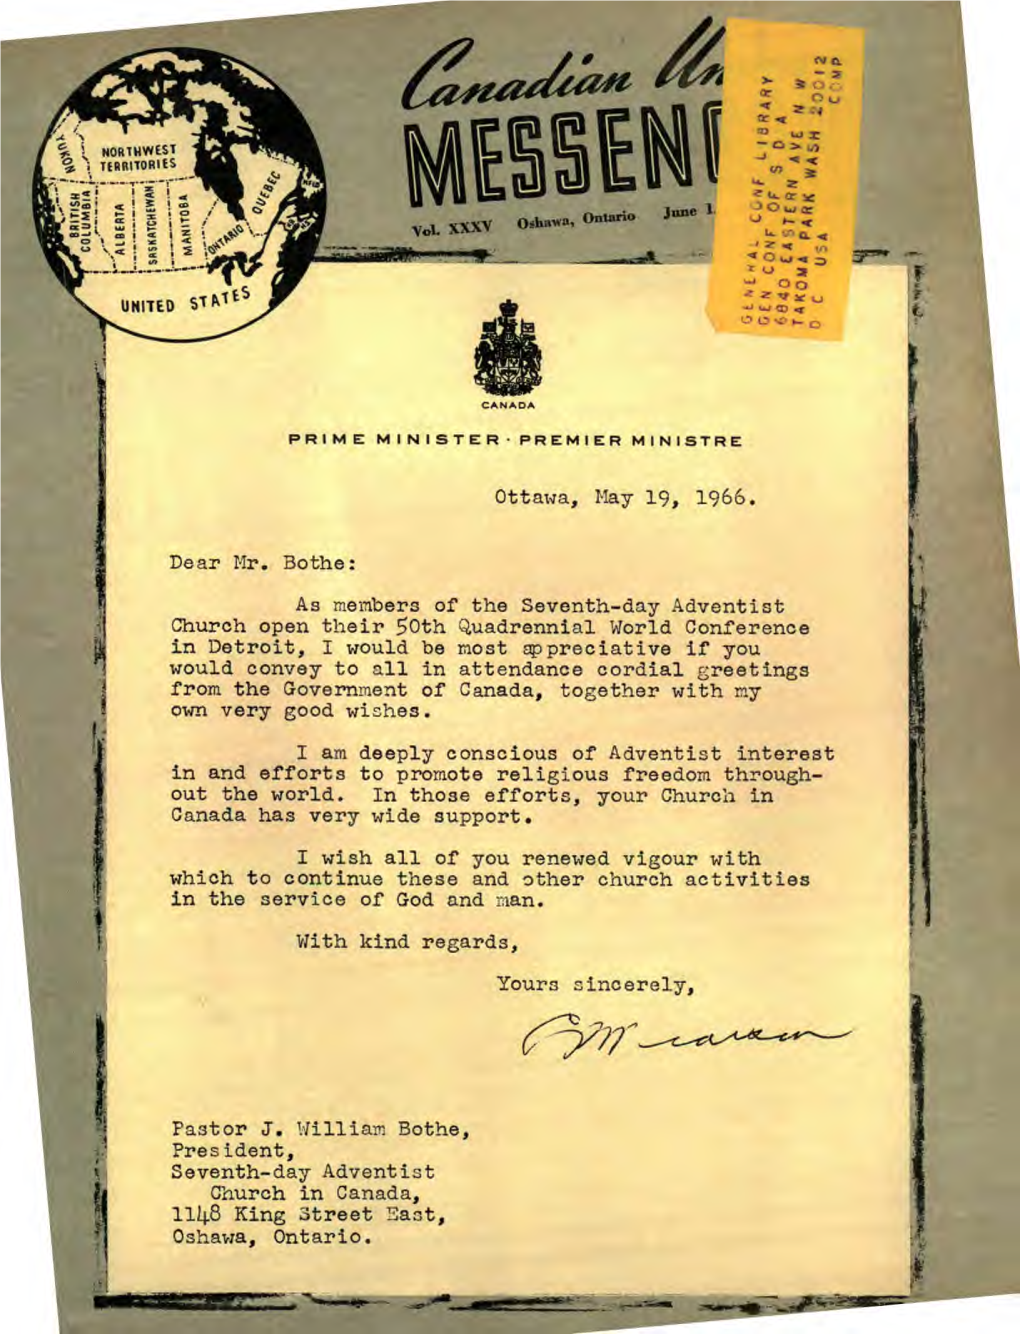 Ottawa, May 19, 1966. Dear Mr. Bathe: As Members of the Seventh